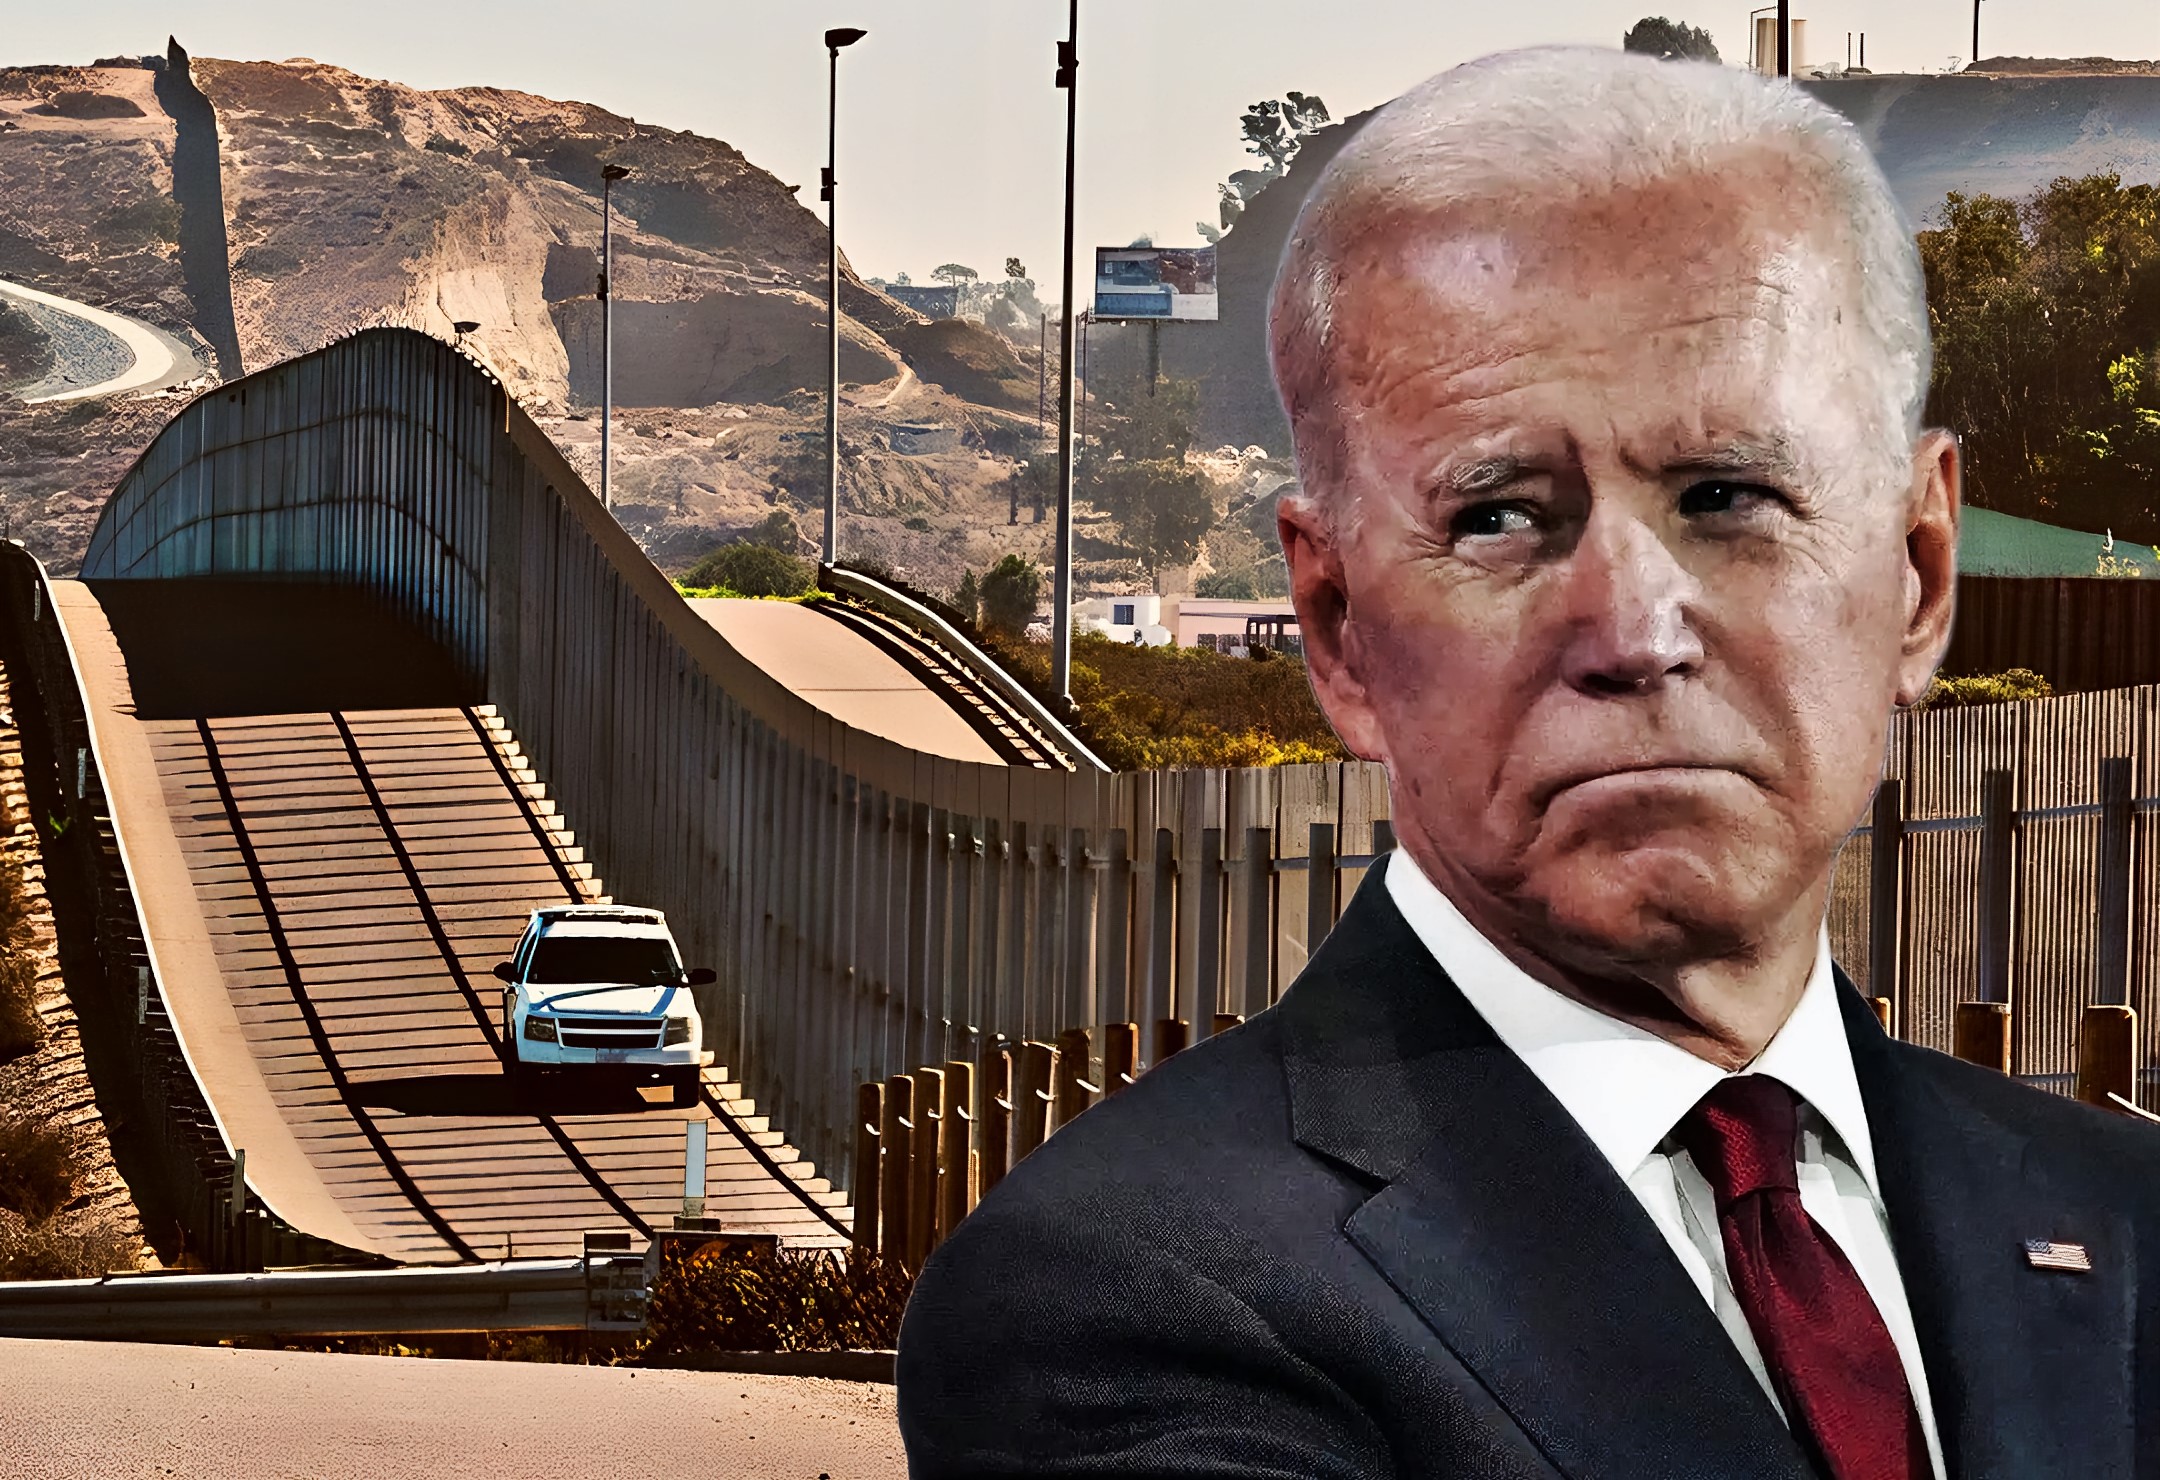 Biden's Latest Immigration Policy: 1 Million Migrants Per Year